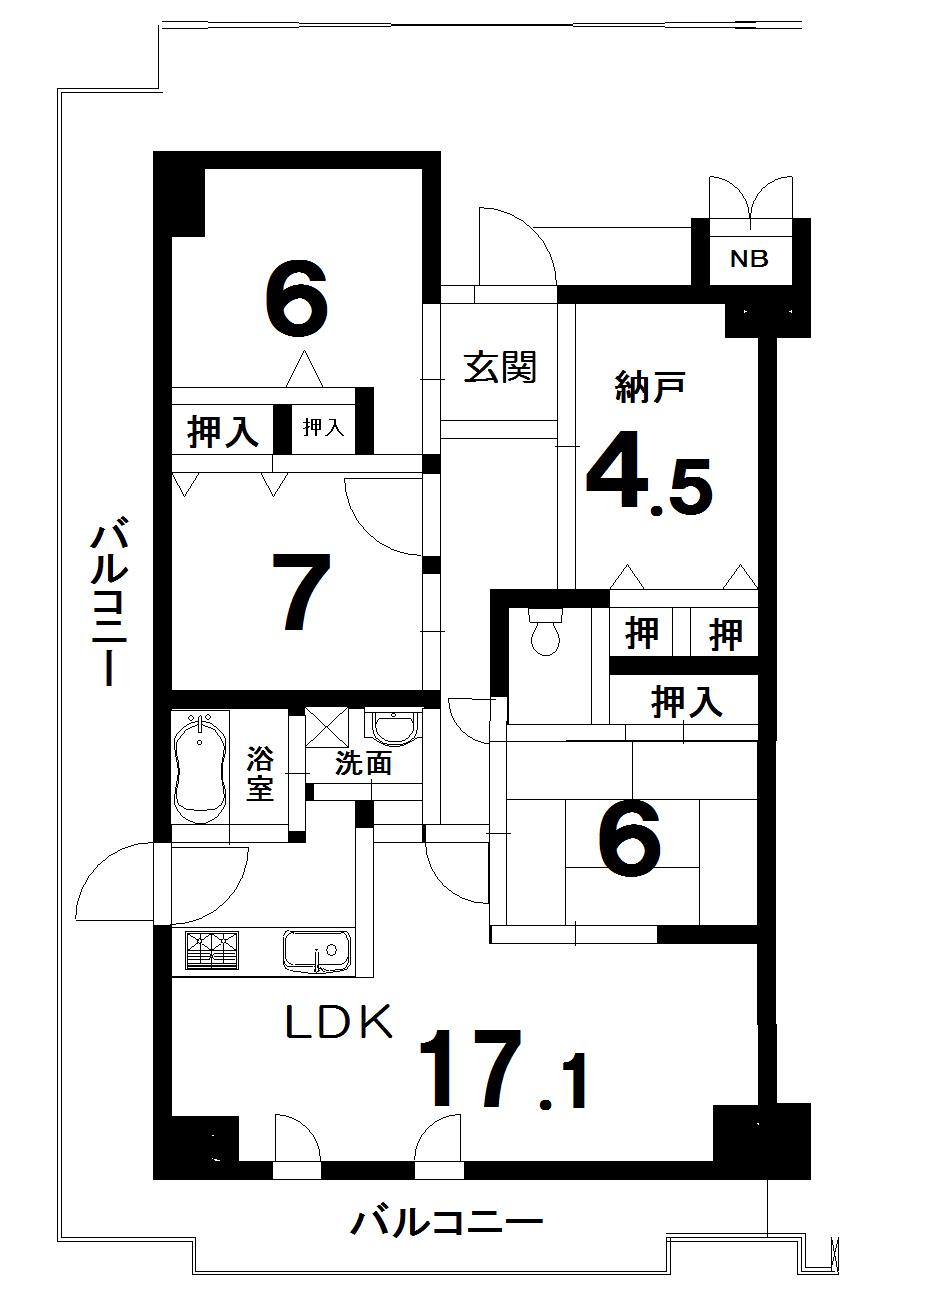 Floor plan. 4LDK, Price 13.4 million yen, Occupied area 86.39 sq m , Balcony area 20.56 sq m